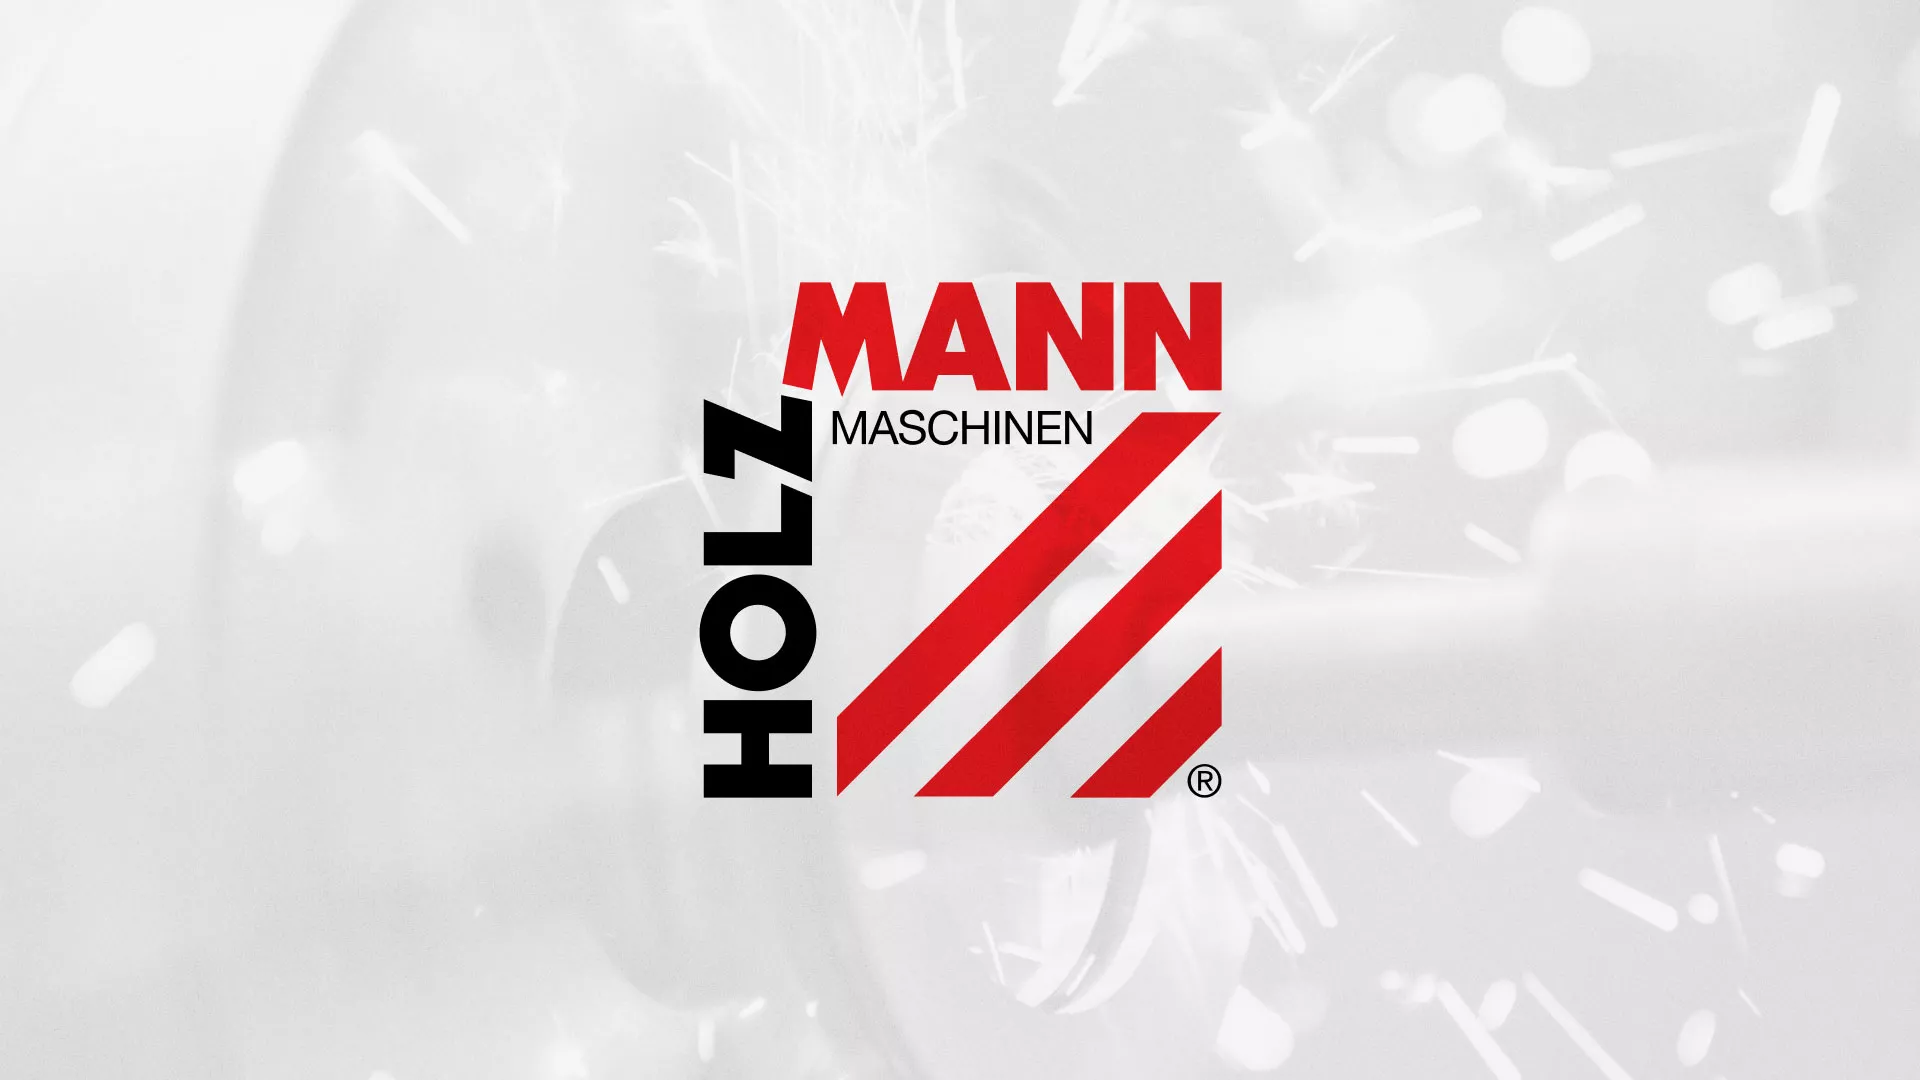 Создание сайта компании «HOLZMANN Maschinen GmbH» в Глазове